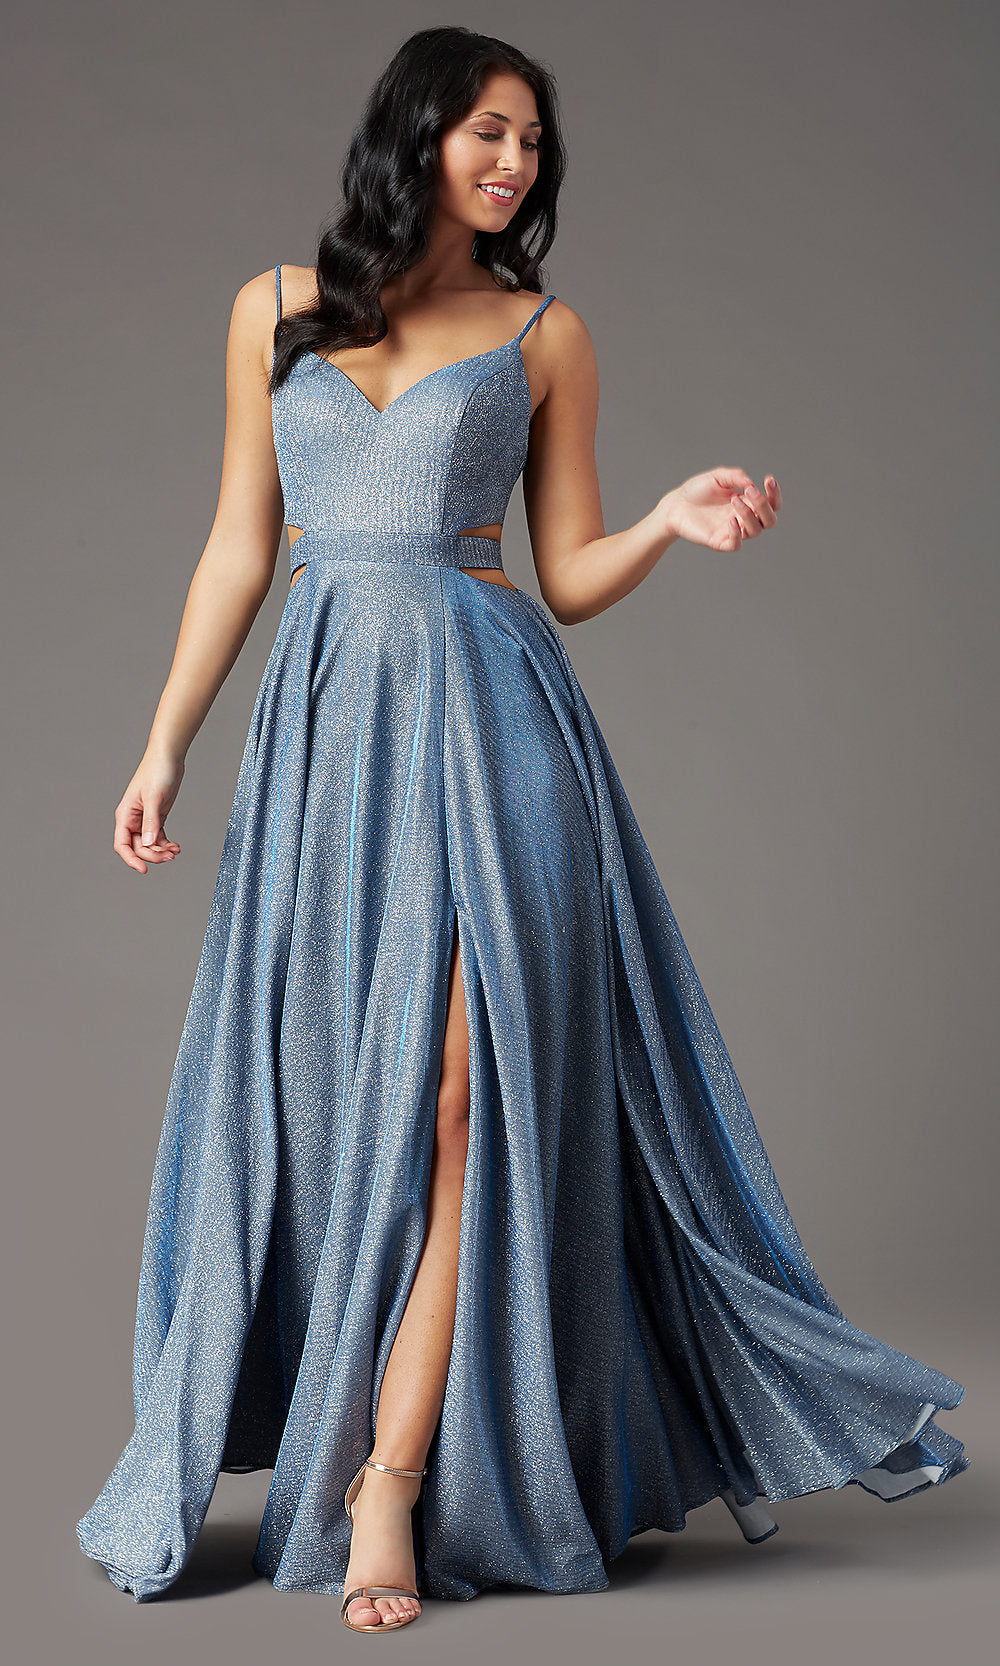 blue glitter dress